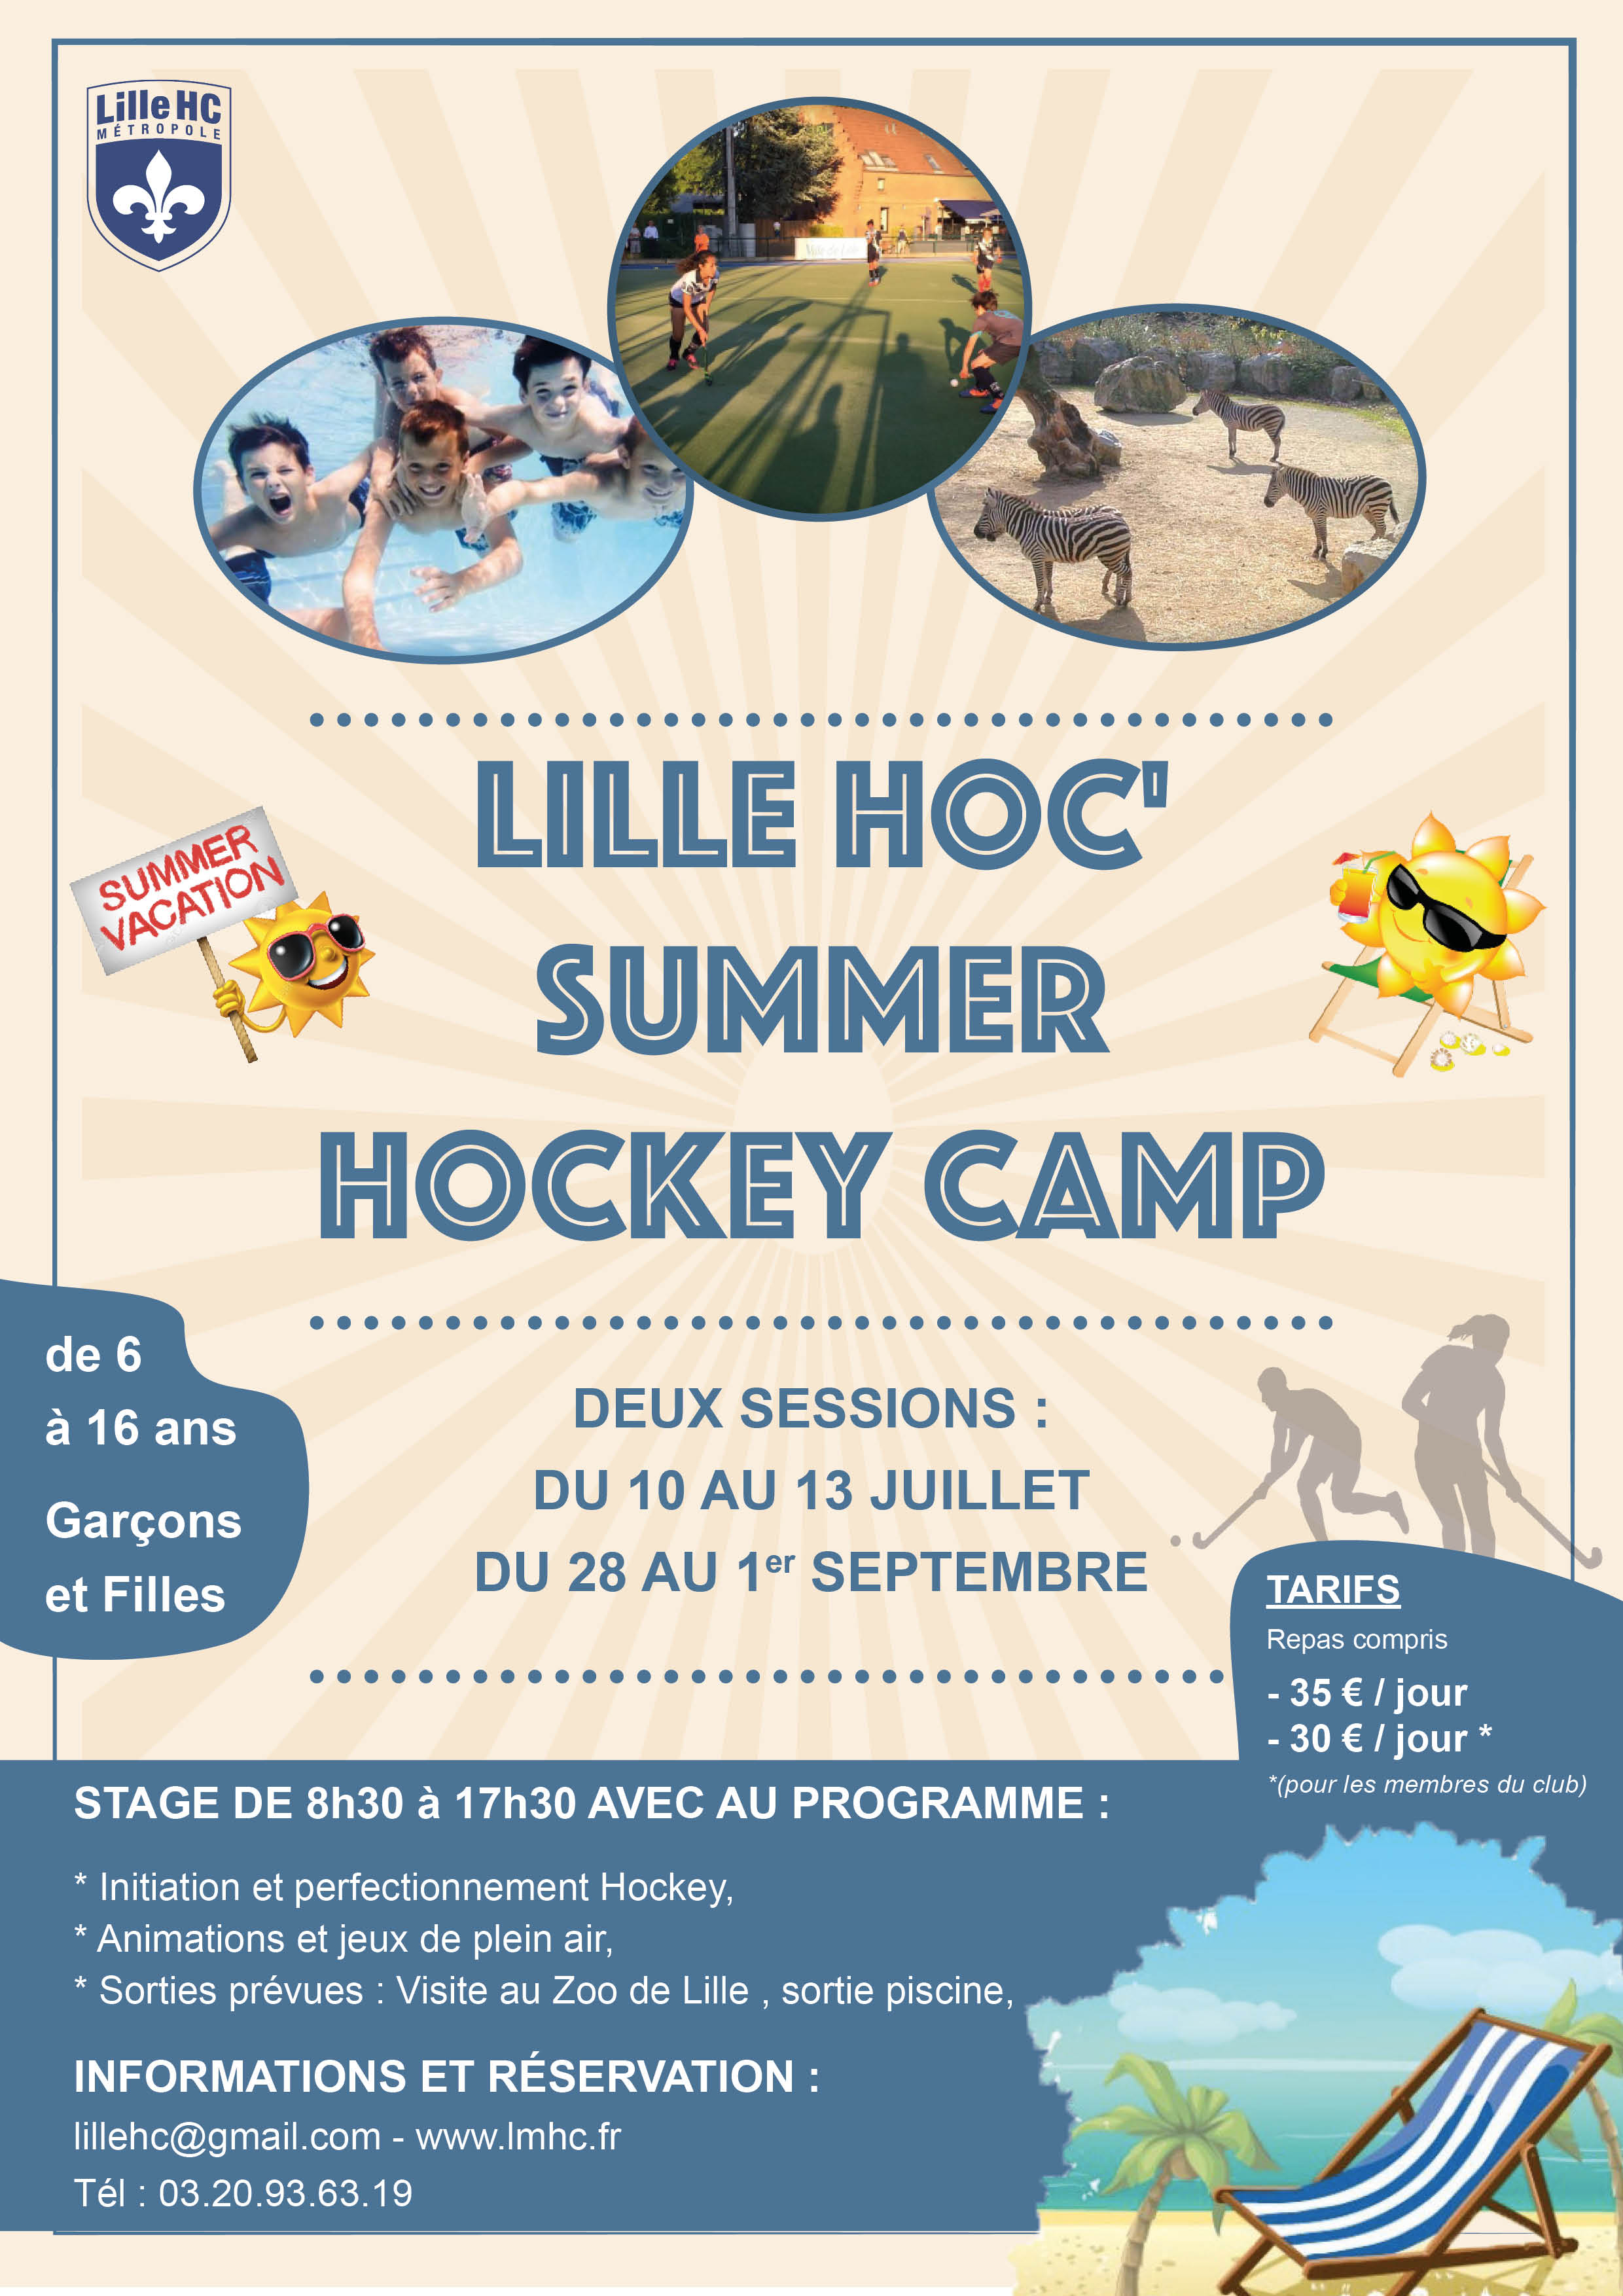 Lille Hoc Summer Hockey Camp